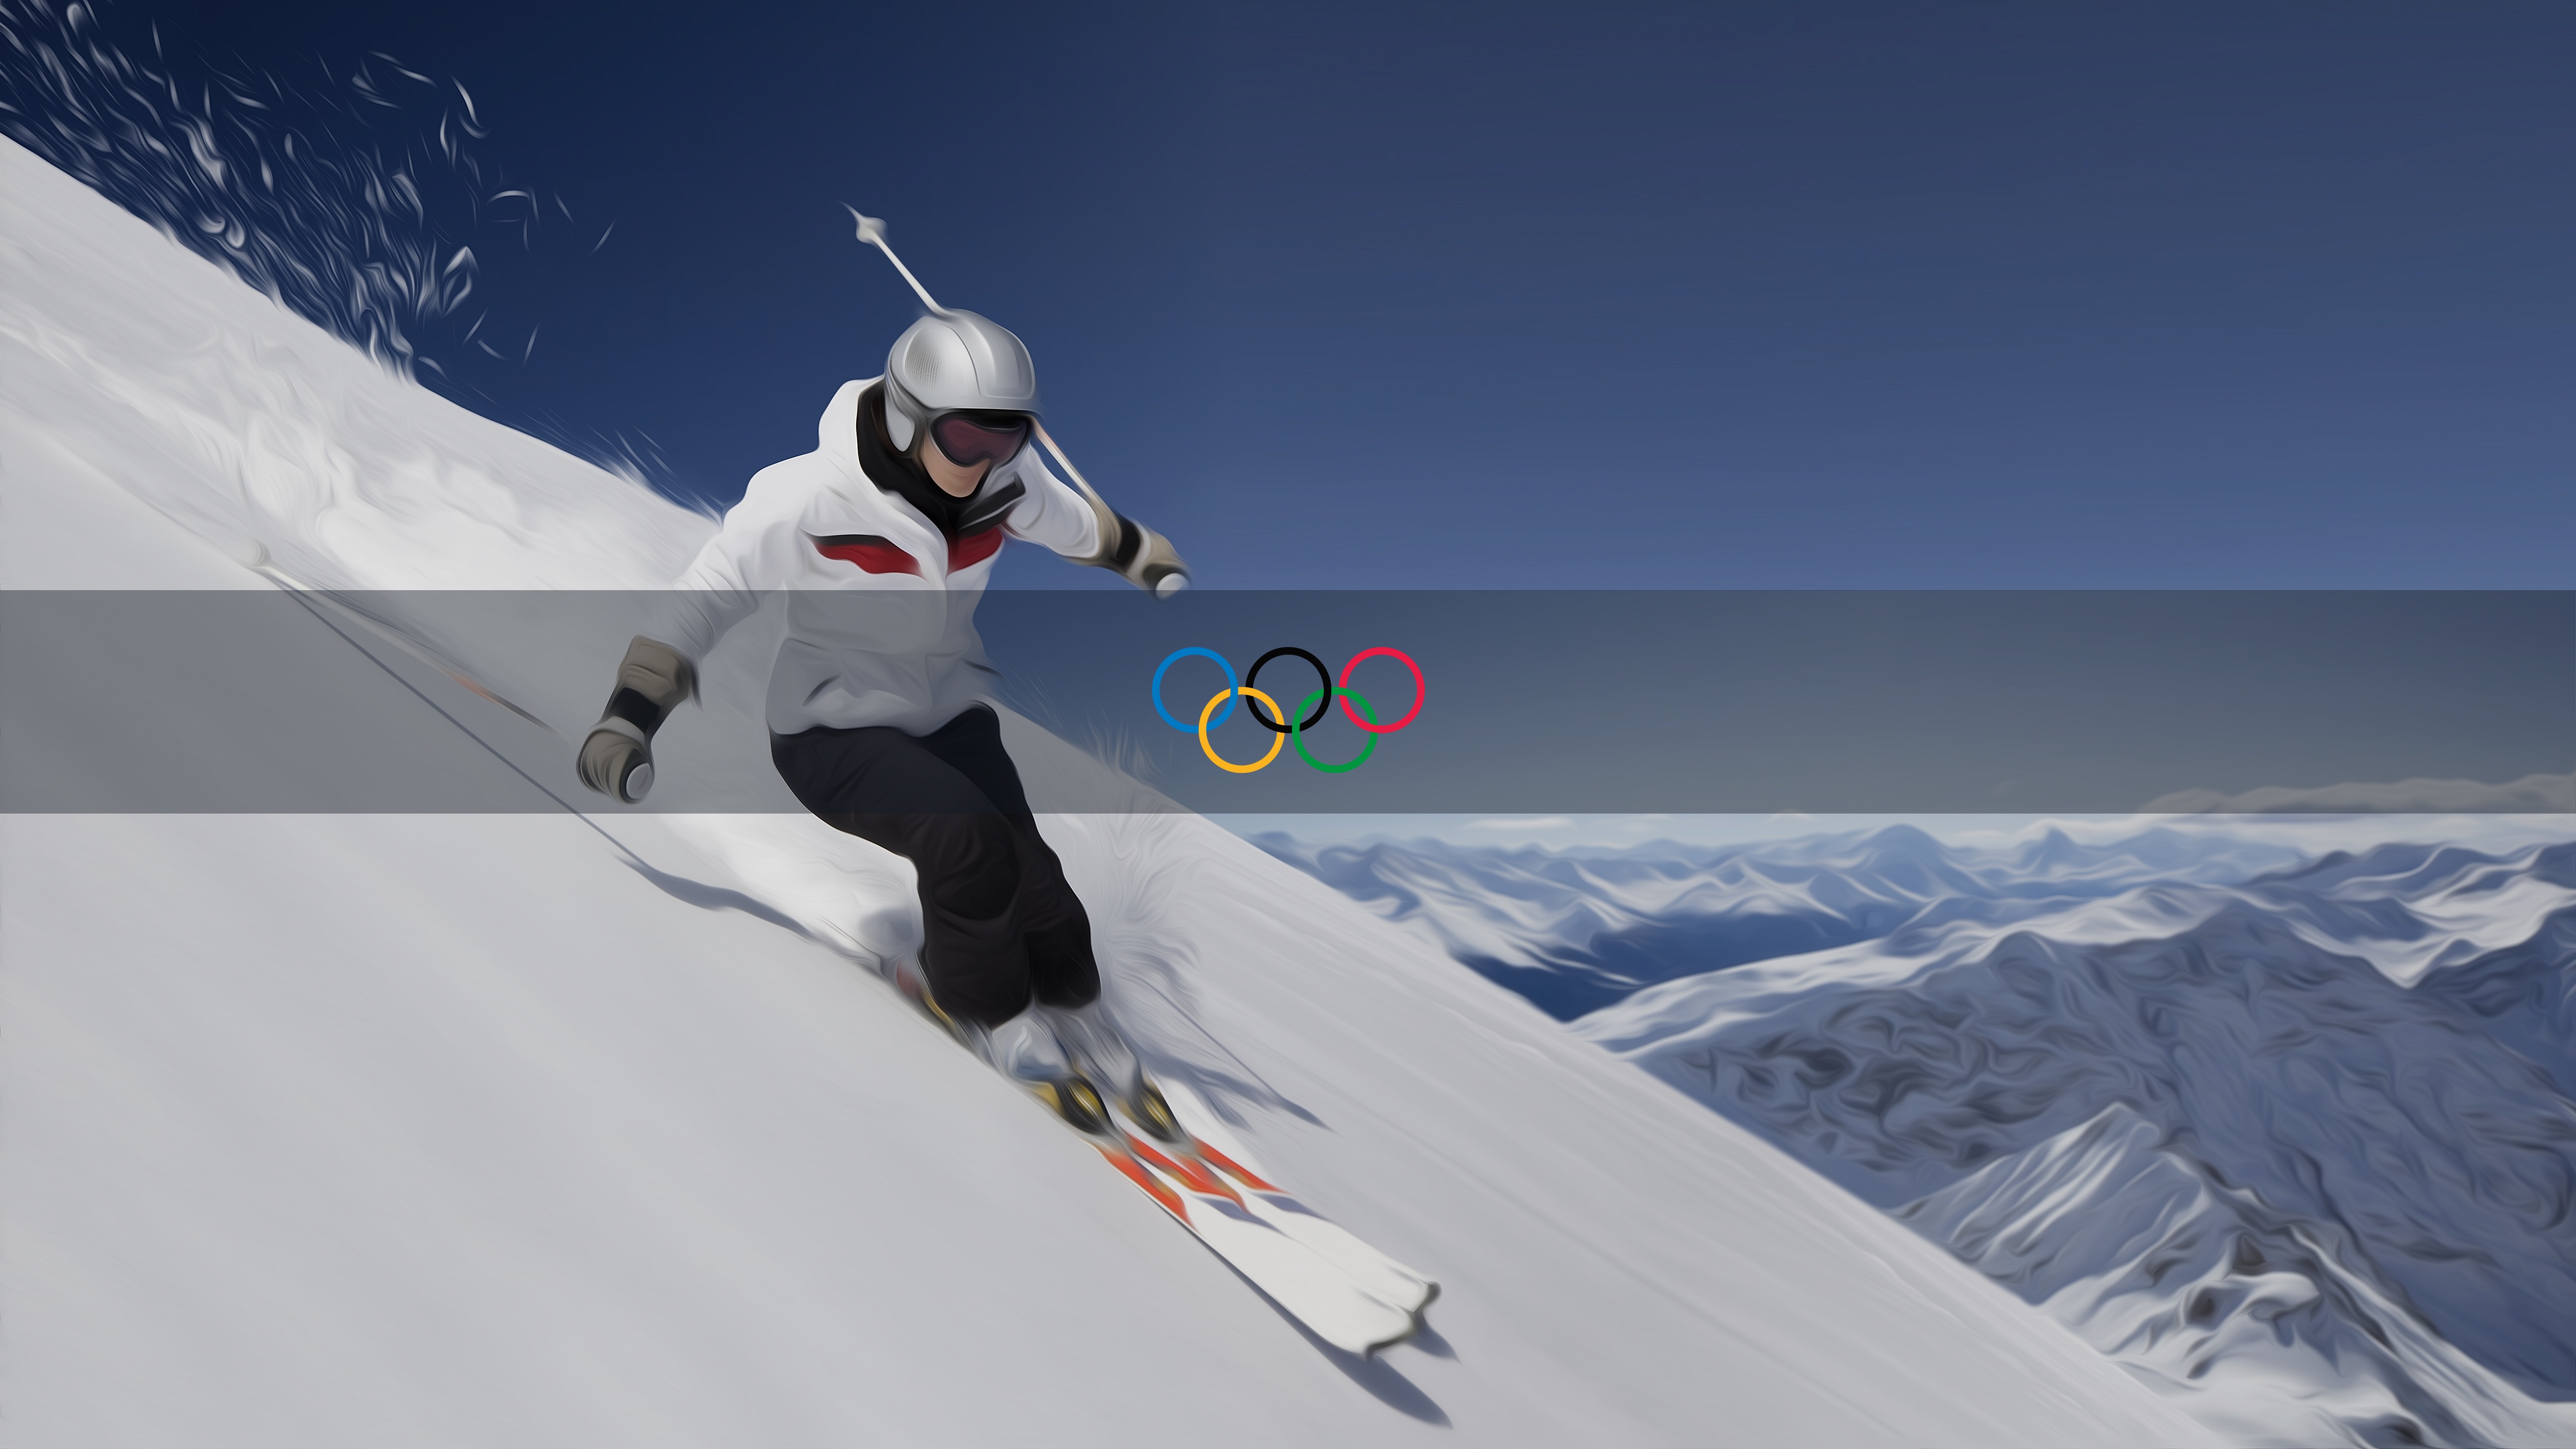 olympic wallpaper,skier,snow,ski,extreme sport,alpine skiing